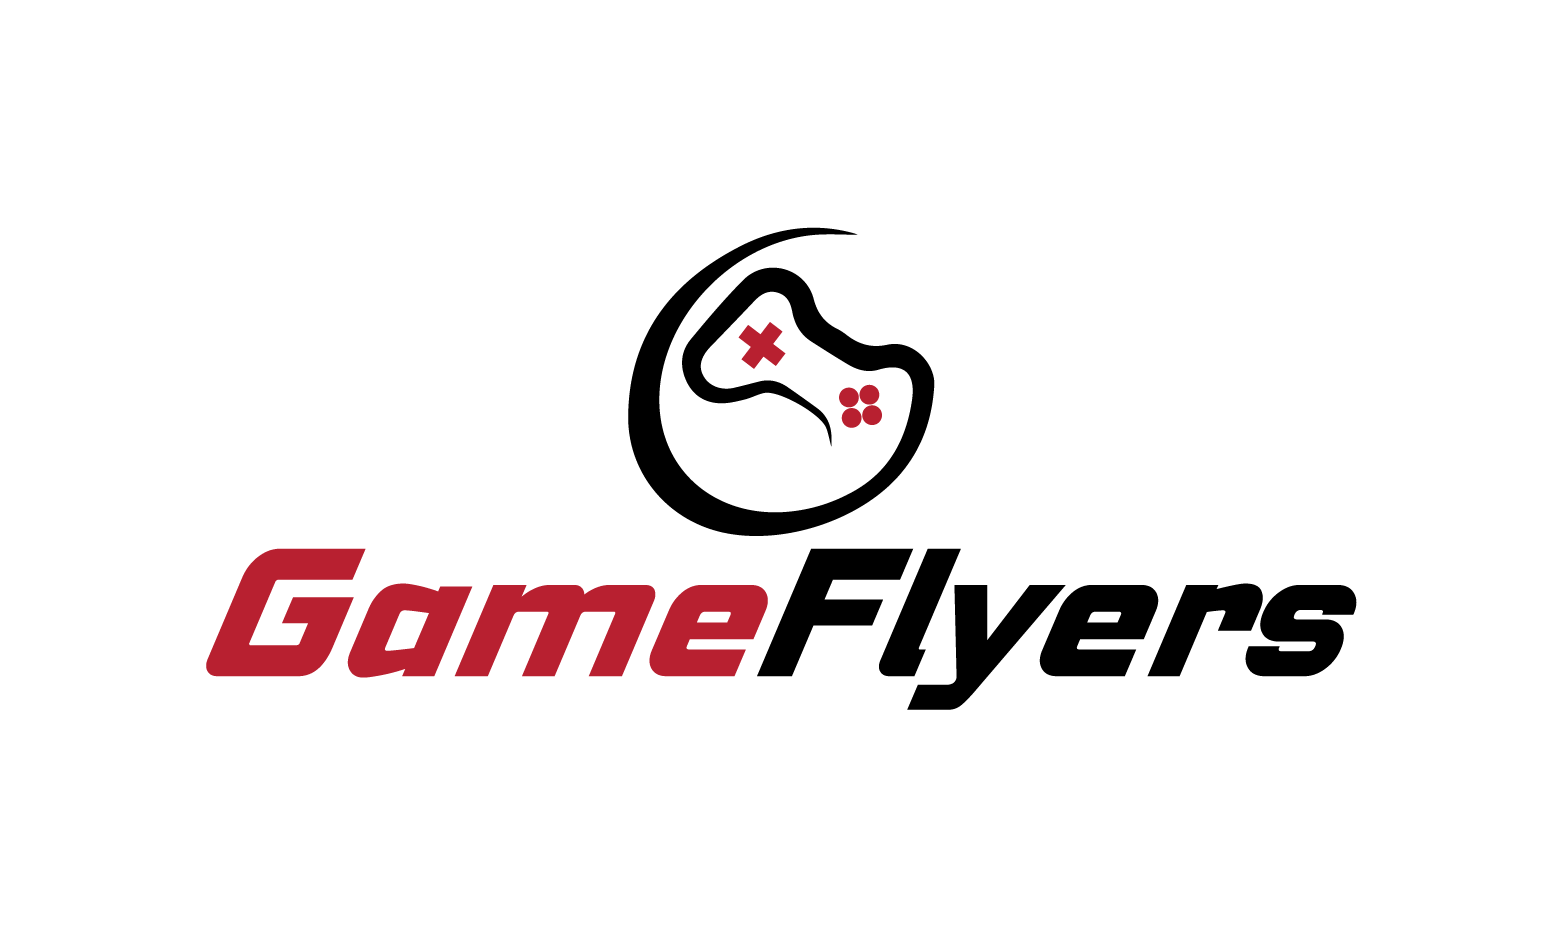 GameFlyers.com - Creative brandable domain for sale